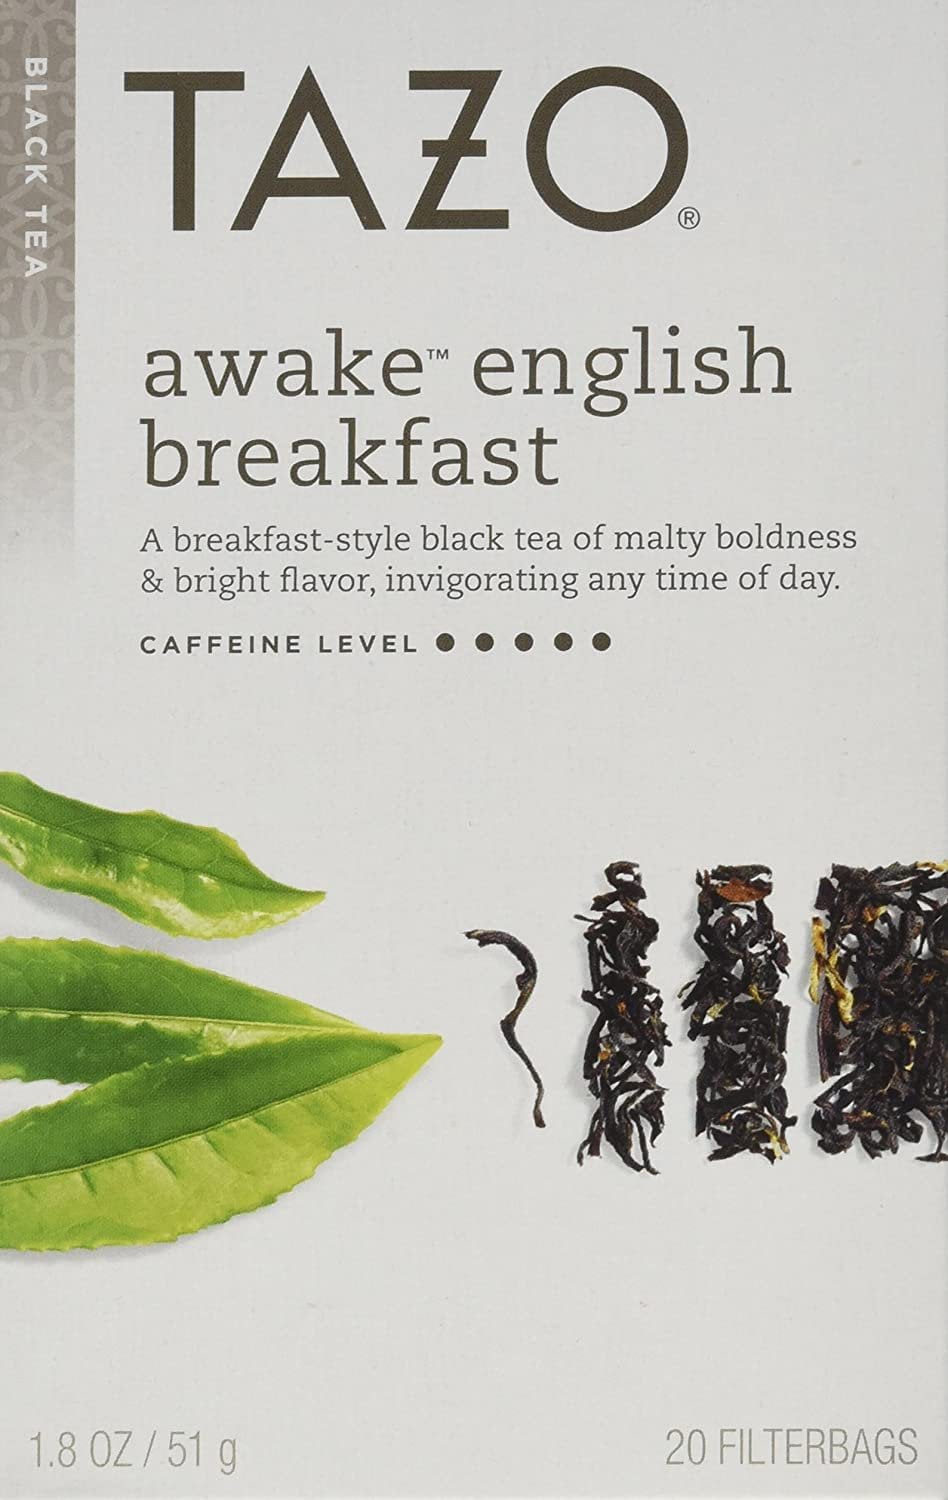 Save on Tazo Organic Awake English Breakfast Black Tea Bags Order Online  Delivery